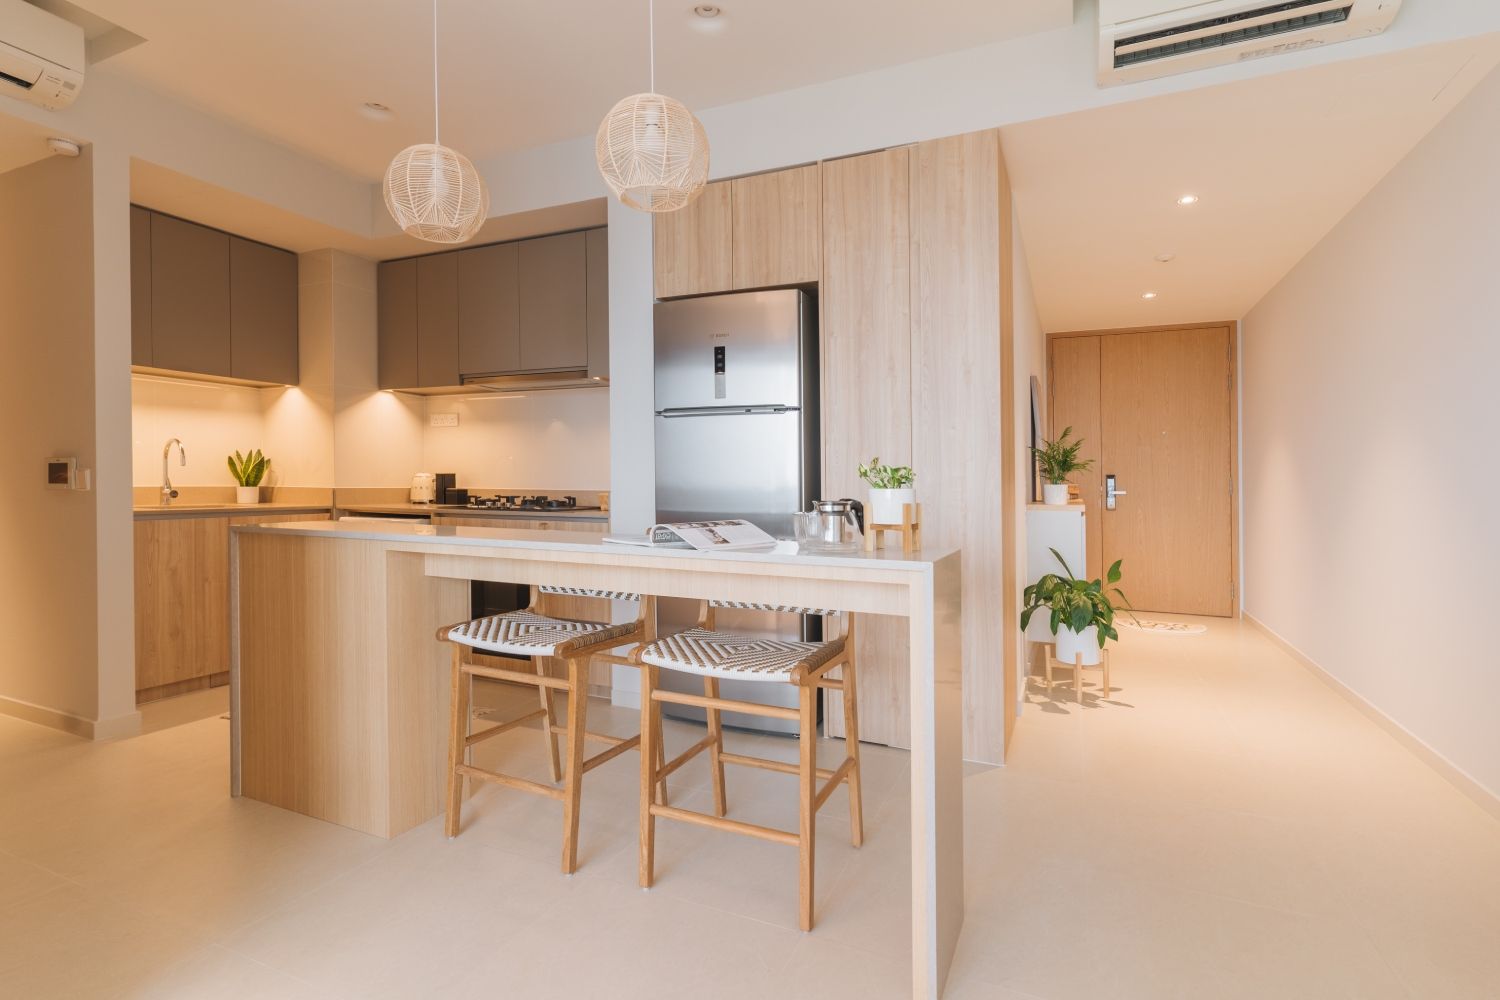 Scandinavian Interior Design For Island Kitchen With A Breakfast Counter